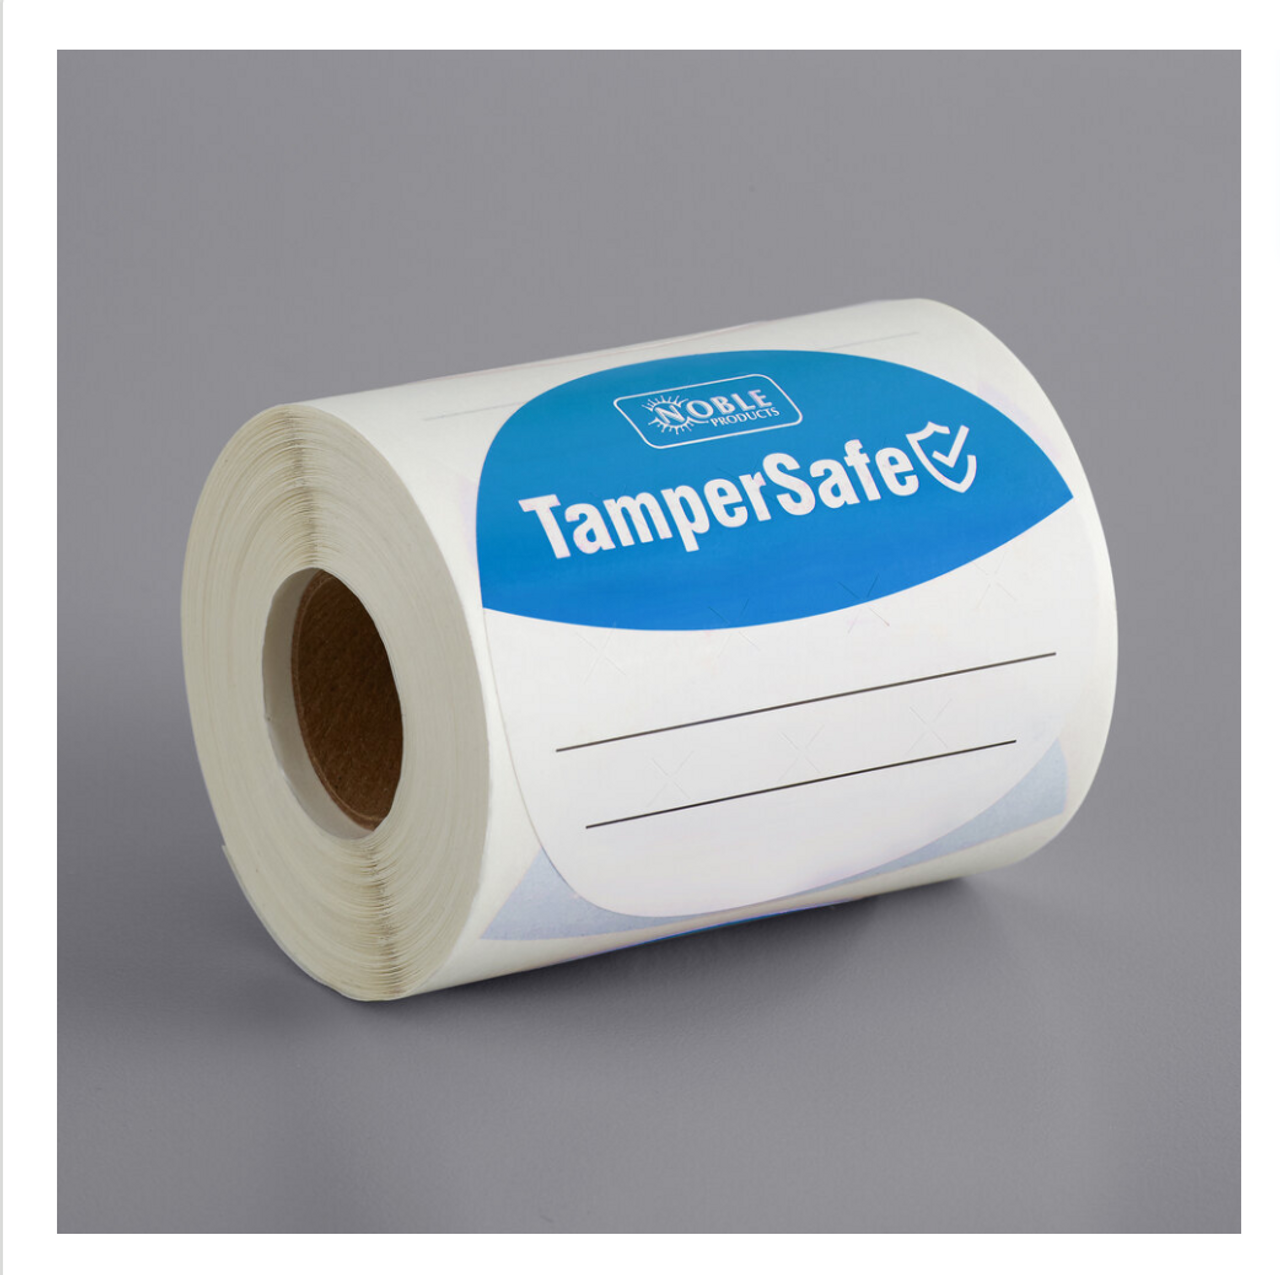  Customizable Blue Paper Tamper-Evident Label - 250/Roll-TamperSafe 3" Round